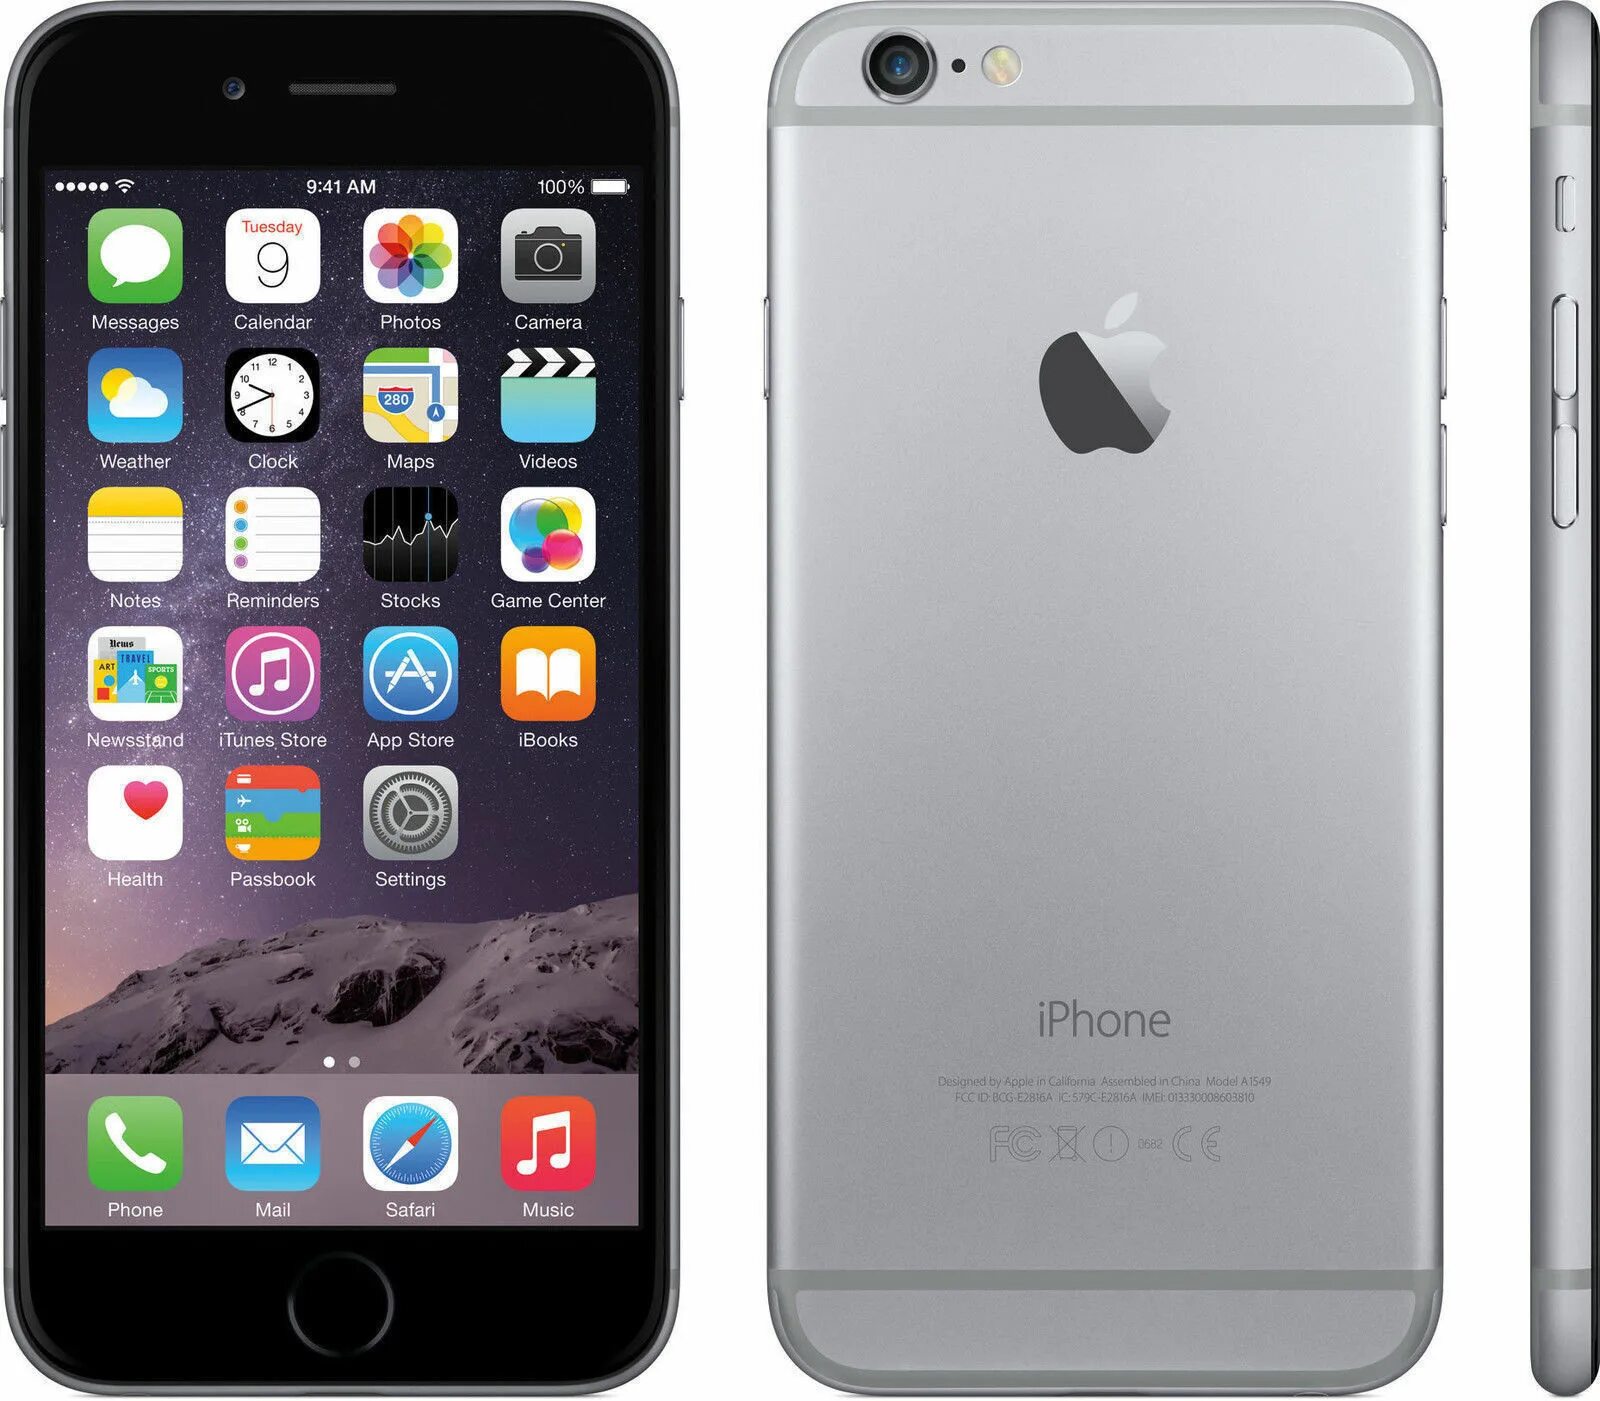 4 8gb. Apple iphone 6 16gb. Iphone 6 Plus 16gb Space Gray. Apple iphone 6 Plus 64gb. Apple iphone 6s Plus 16gb.